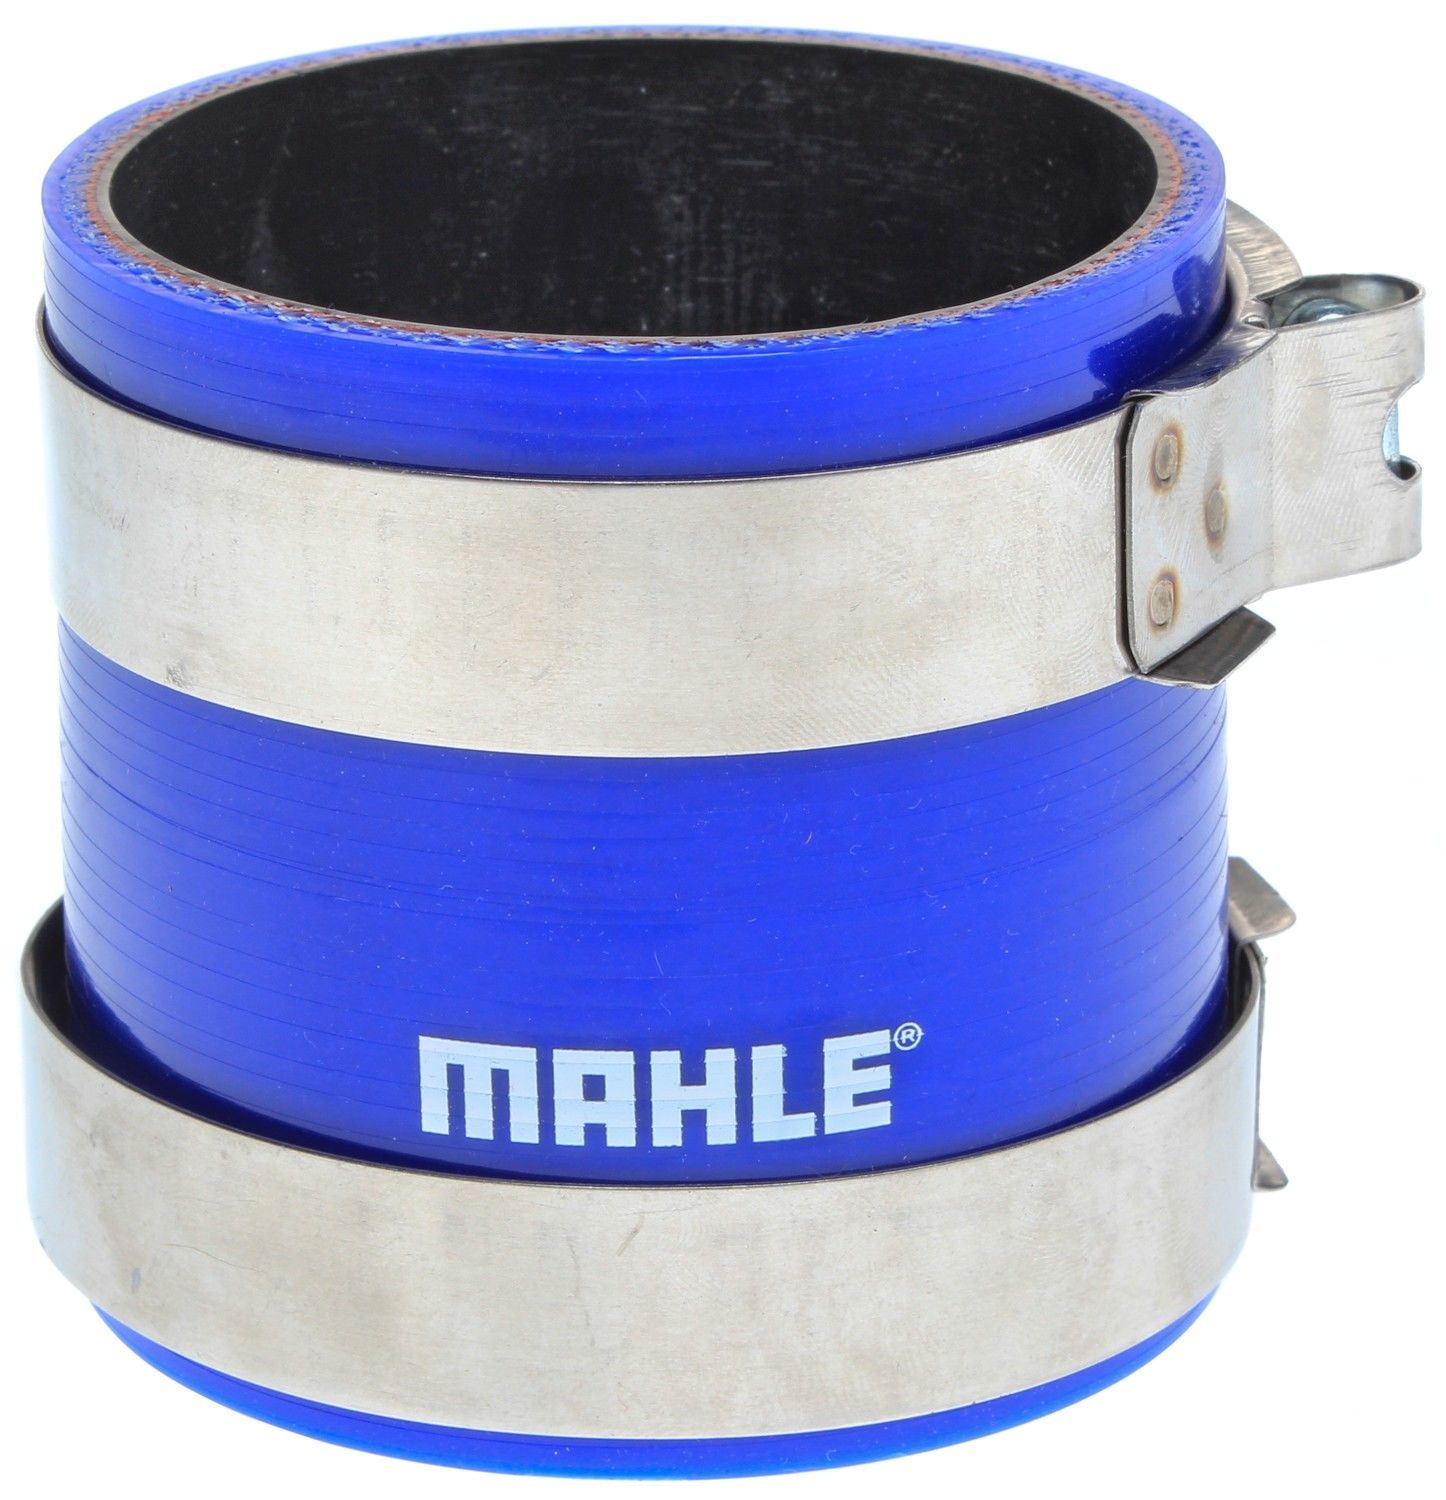 MAHLE ORIGINAL - Intercooler Hose - MHL 014TK23550000